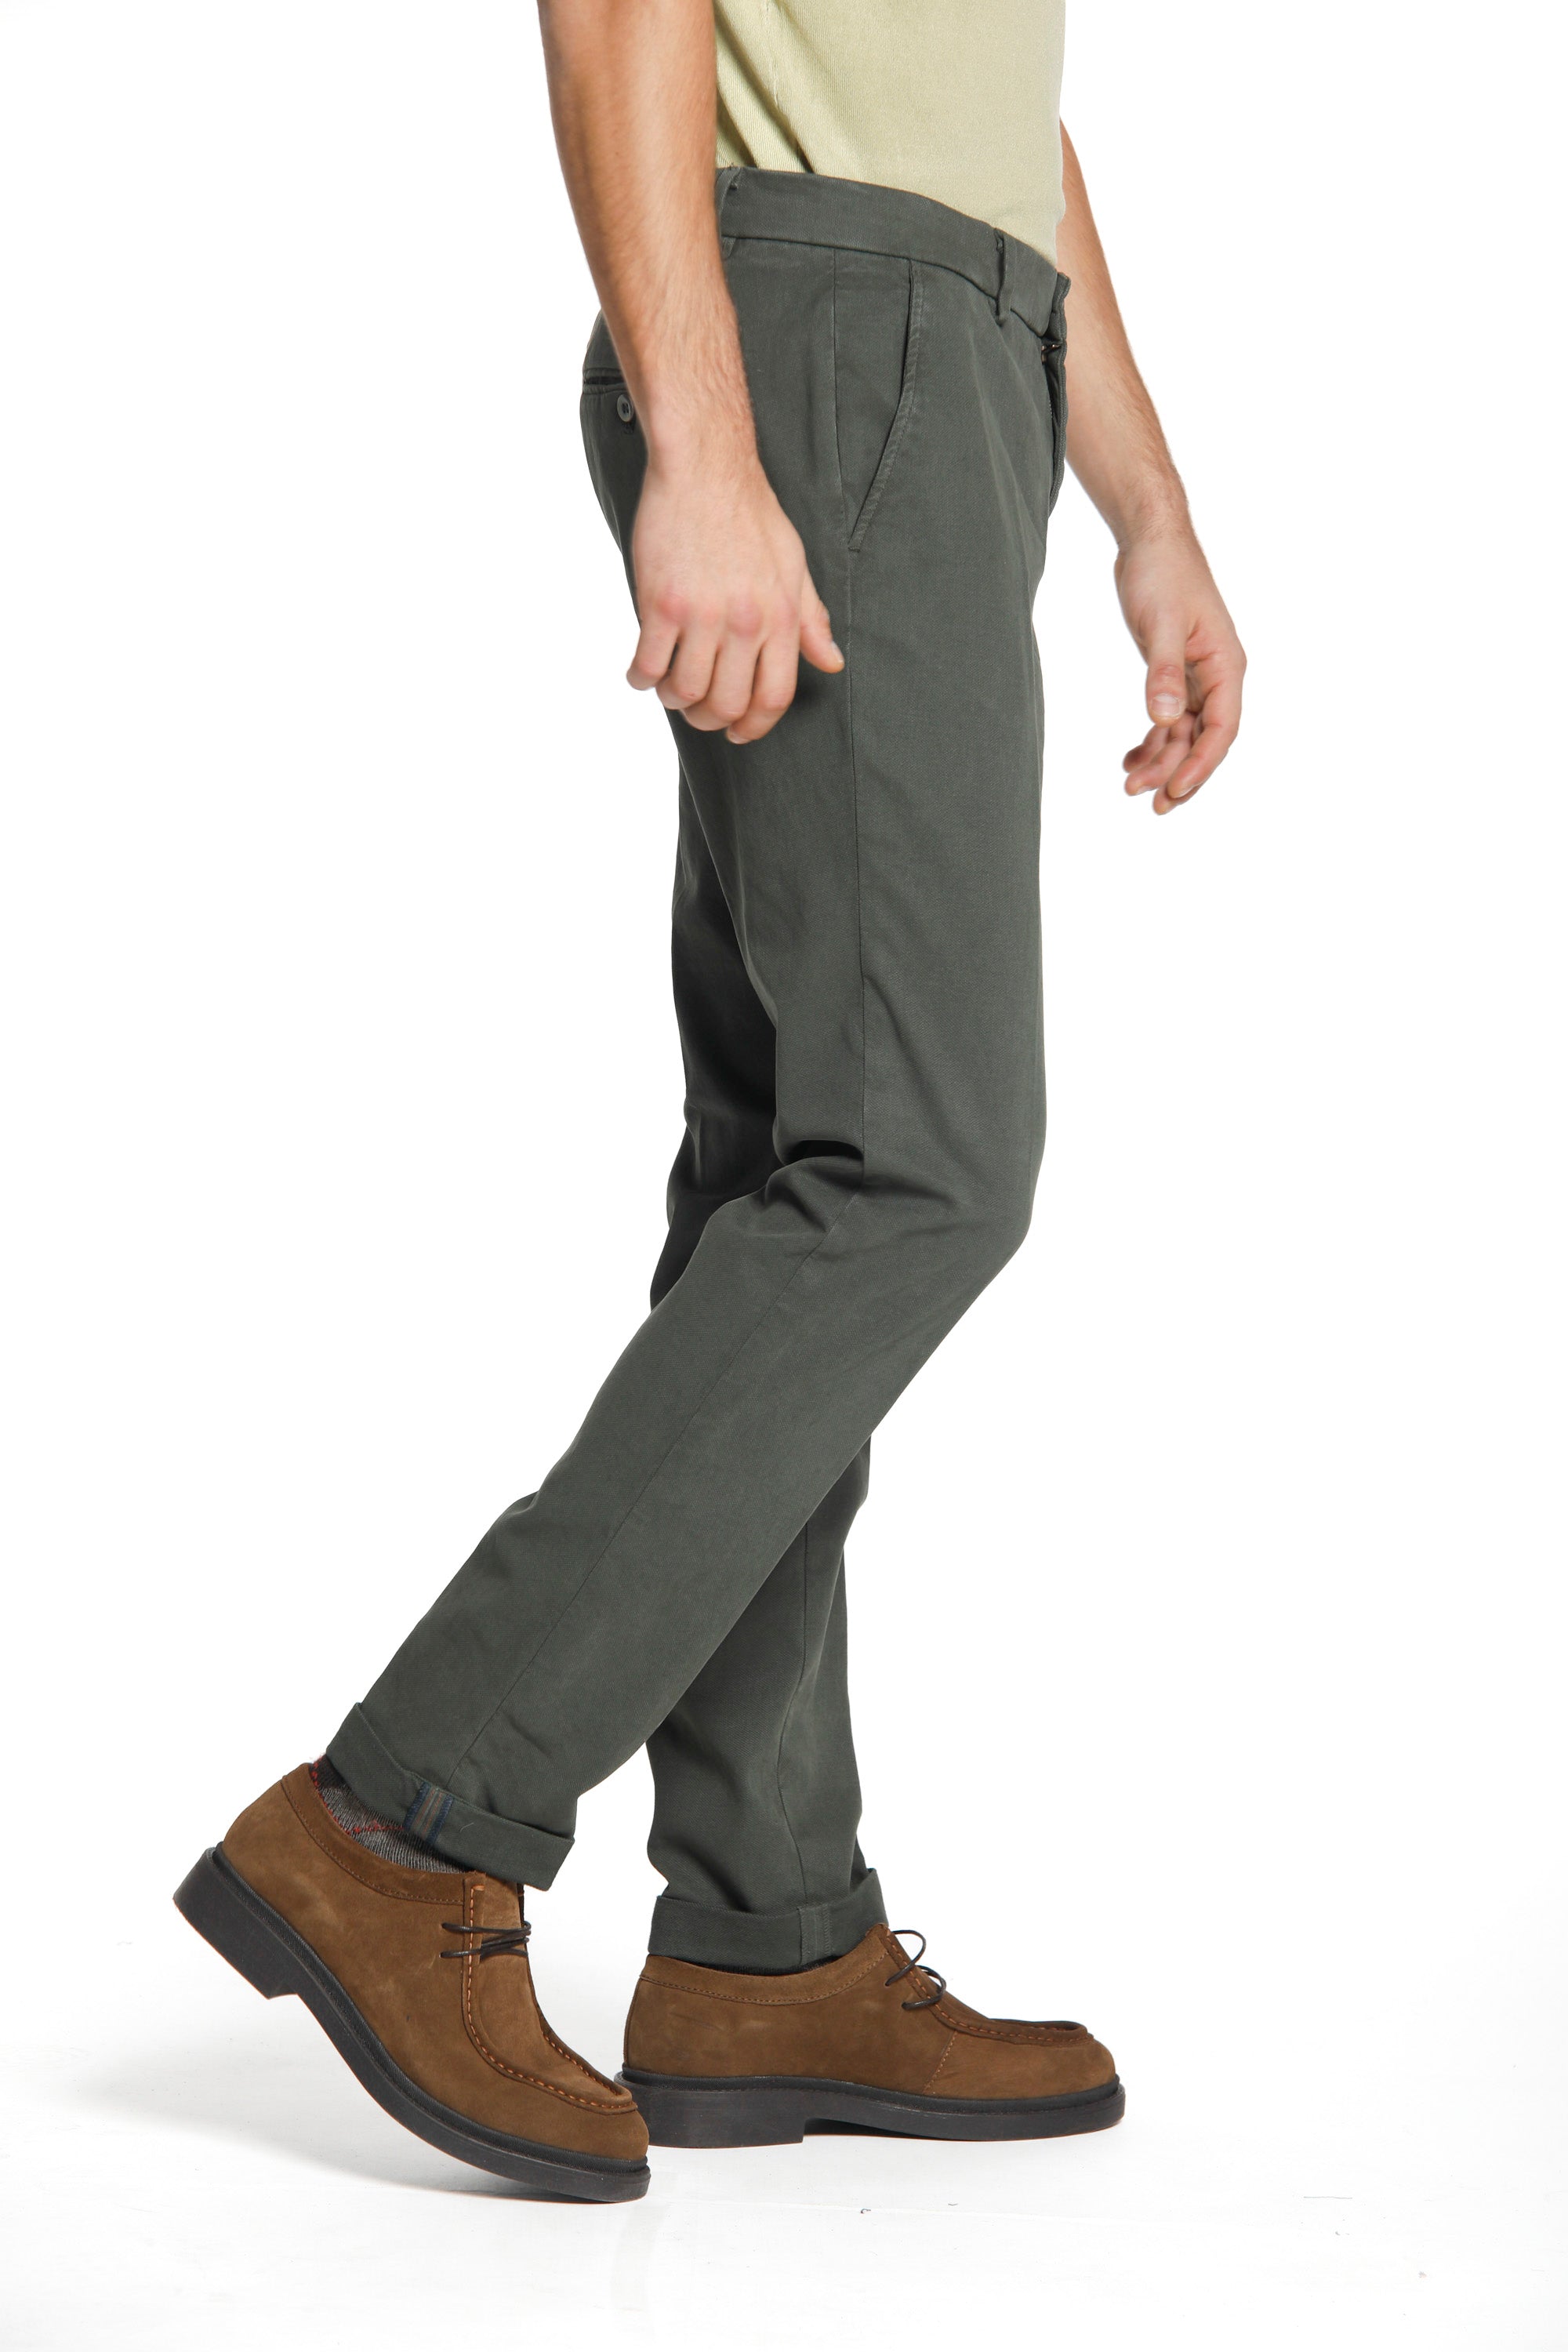 Milano Style pantalon chino homme en gabardine et modal stretch coupe extra slim ①